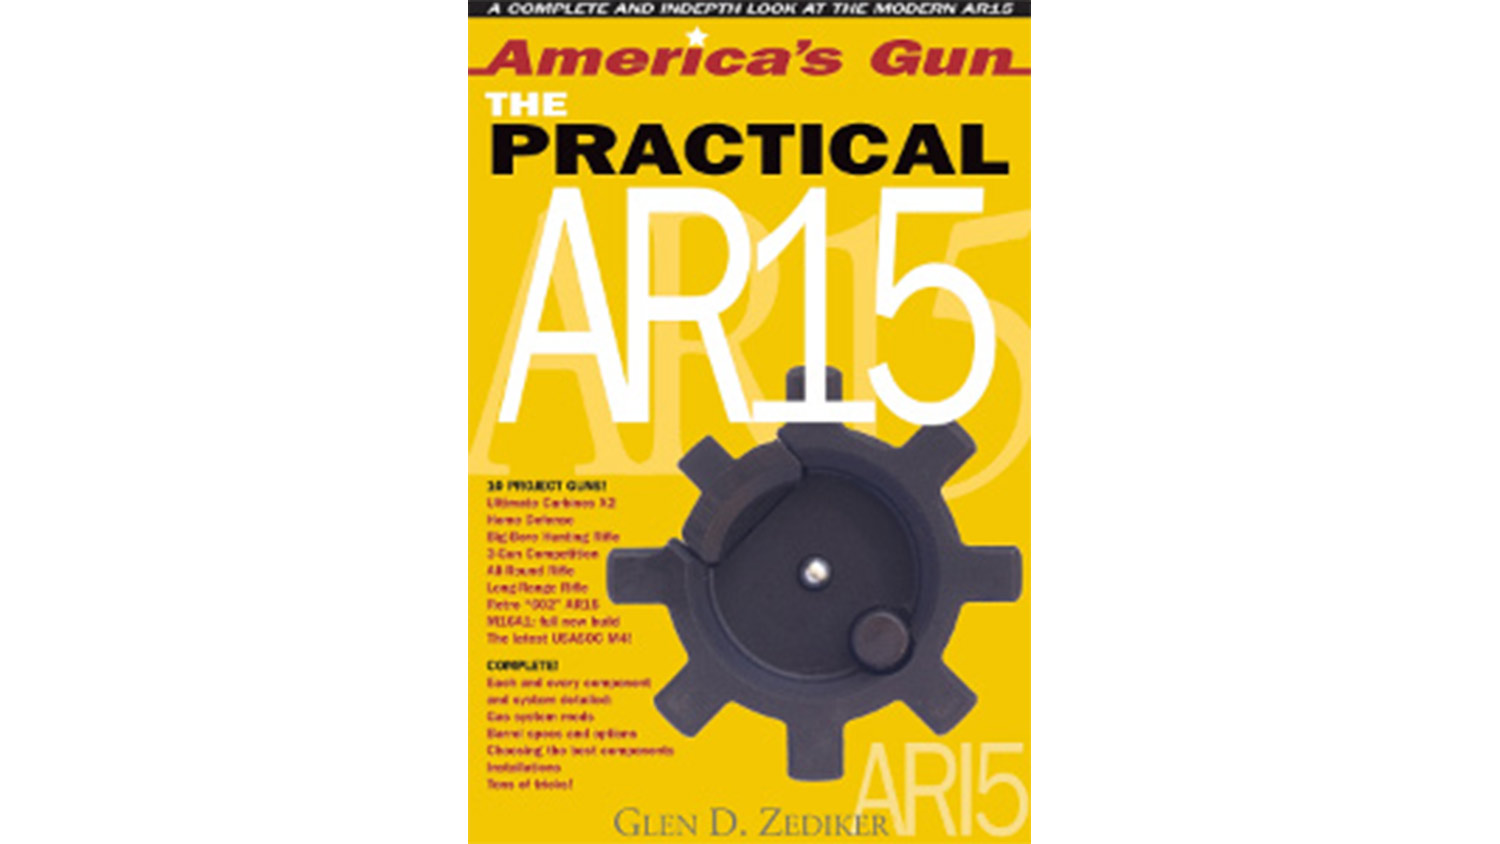 America’s Gun: The Practical AR-15